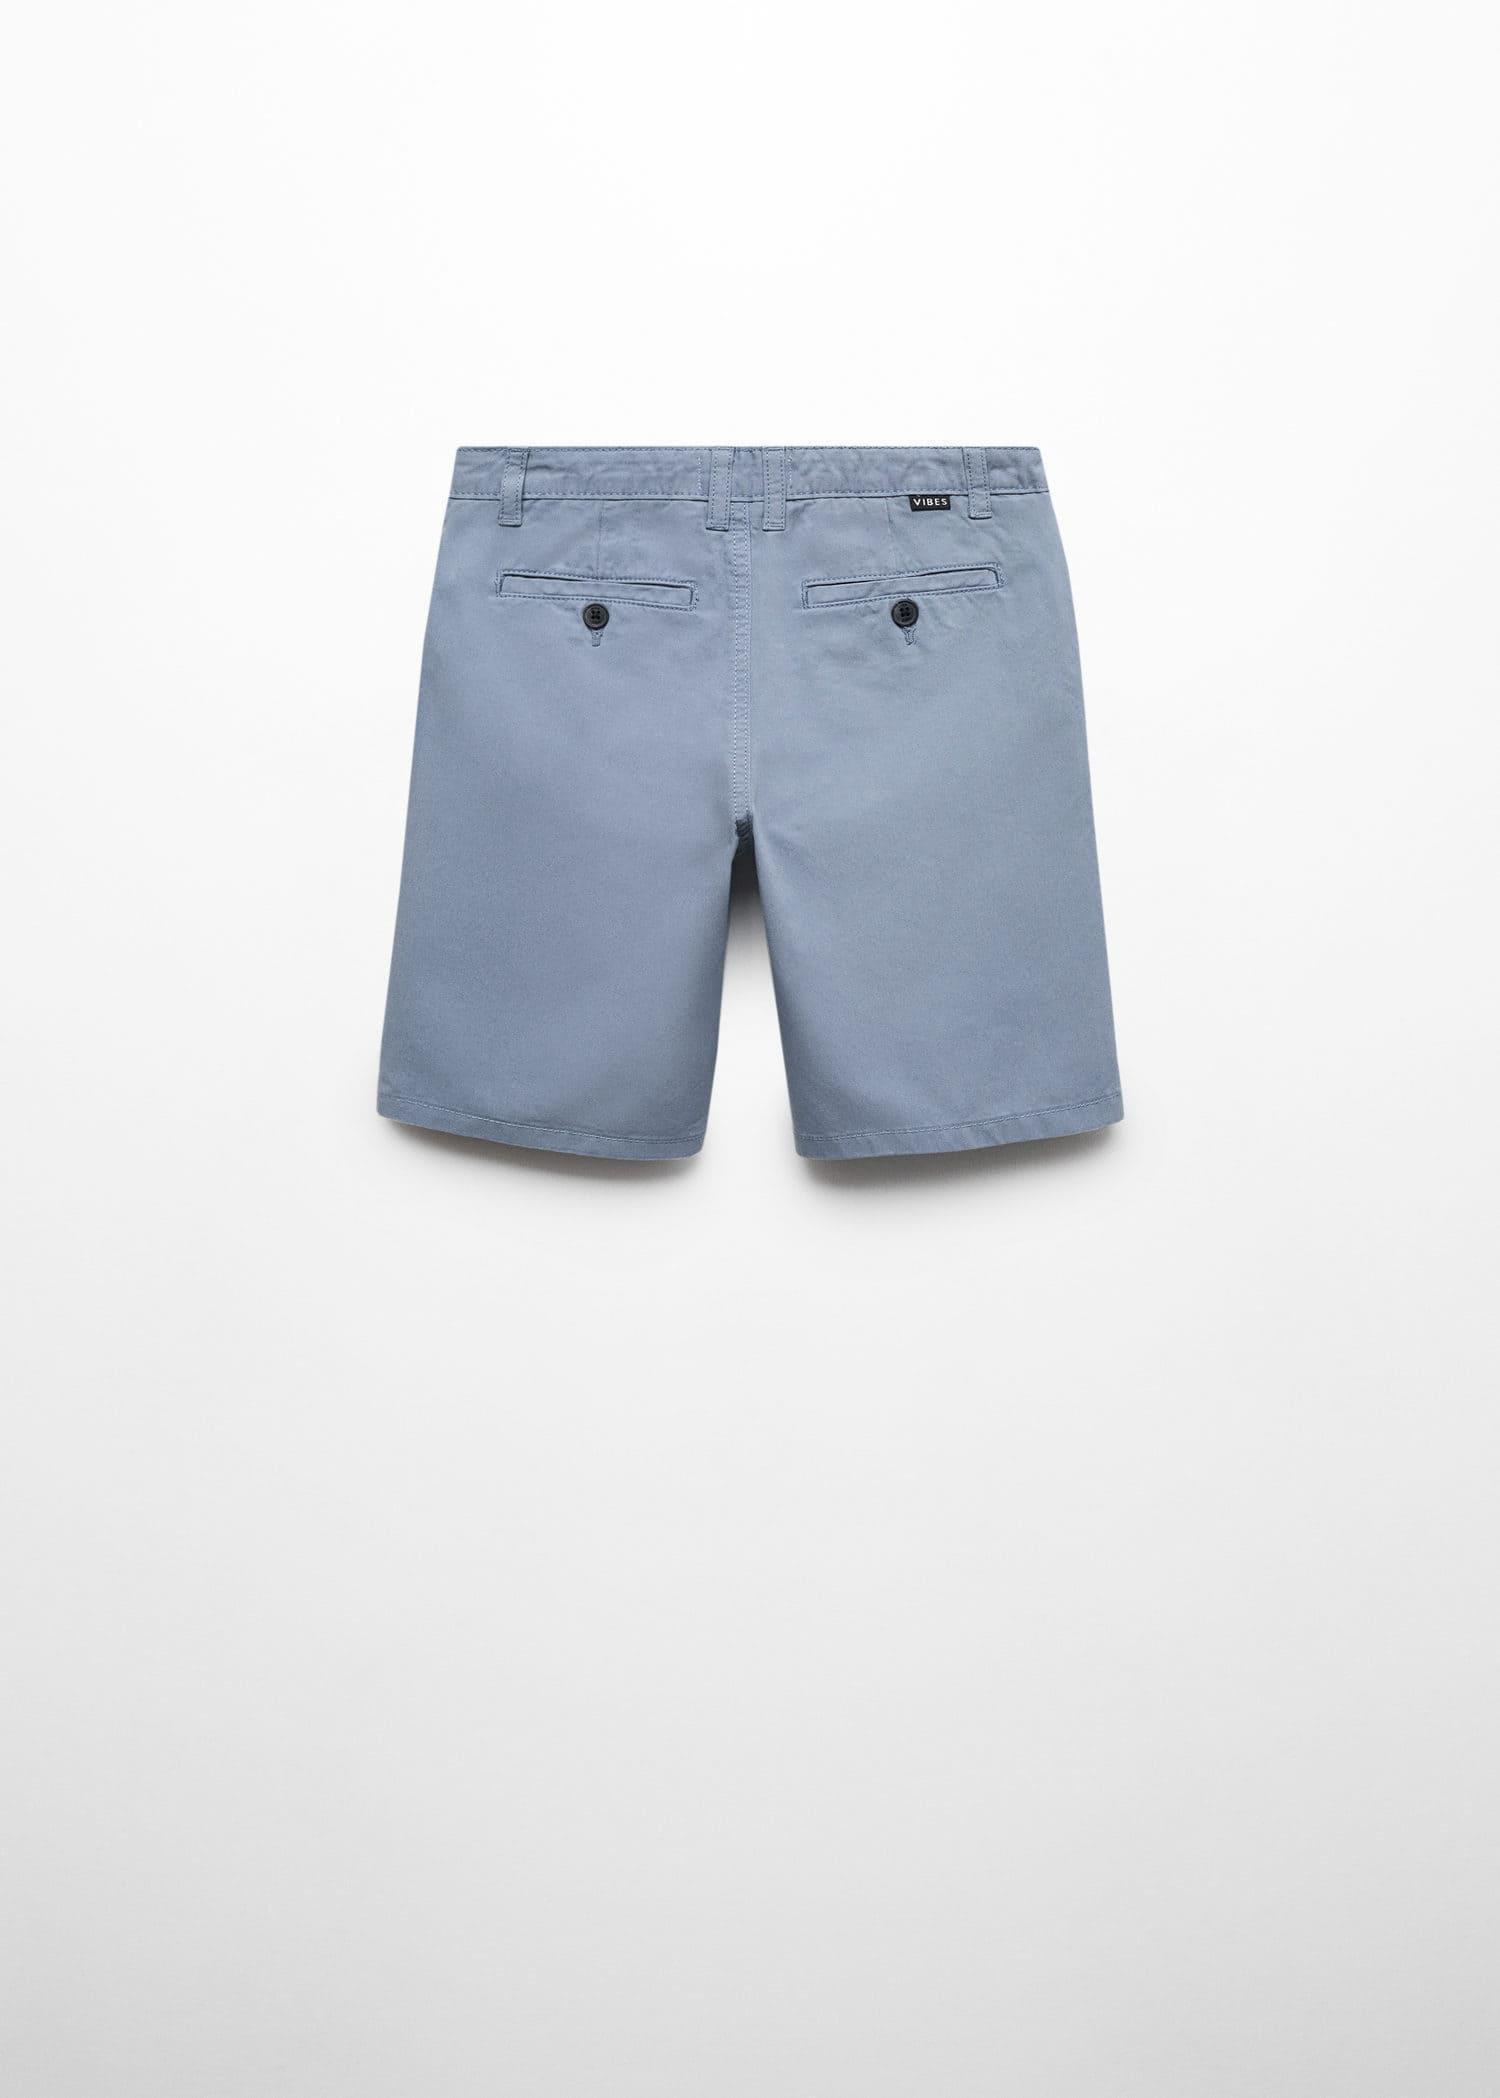 Mango - Blue Cotton Bermuda Shorts, Kids Boys